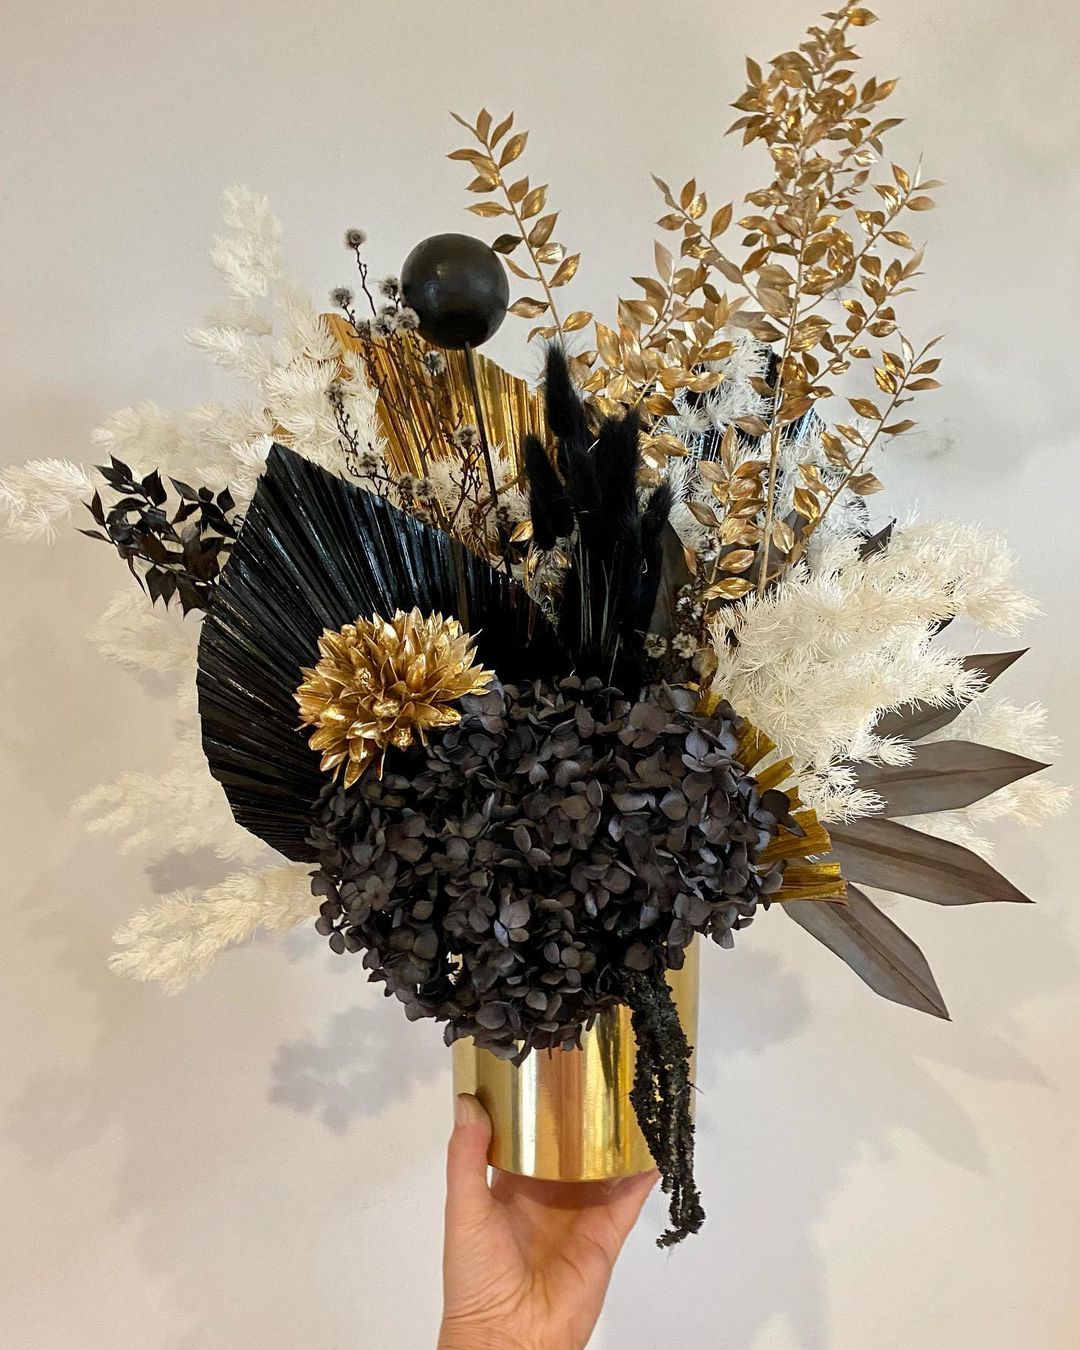 A Gold and Black flower arrangement in a gold vase